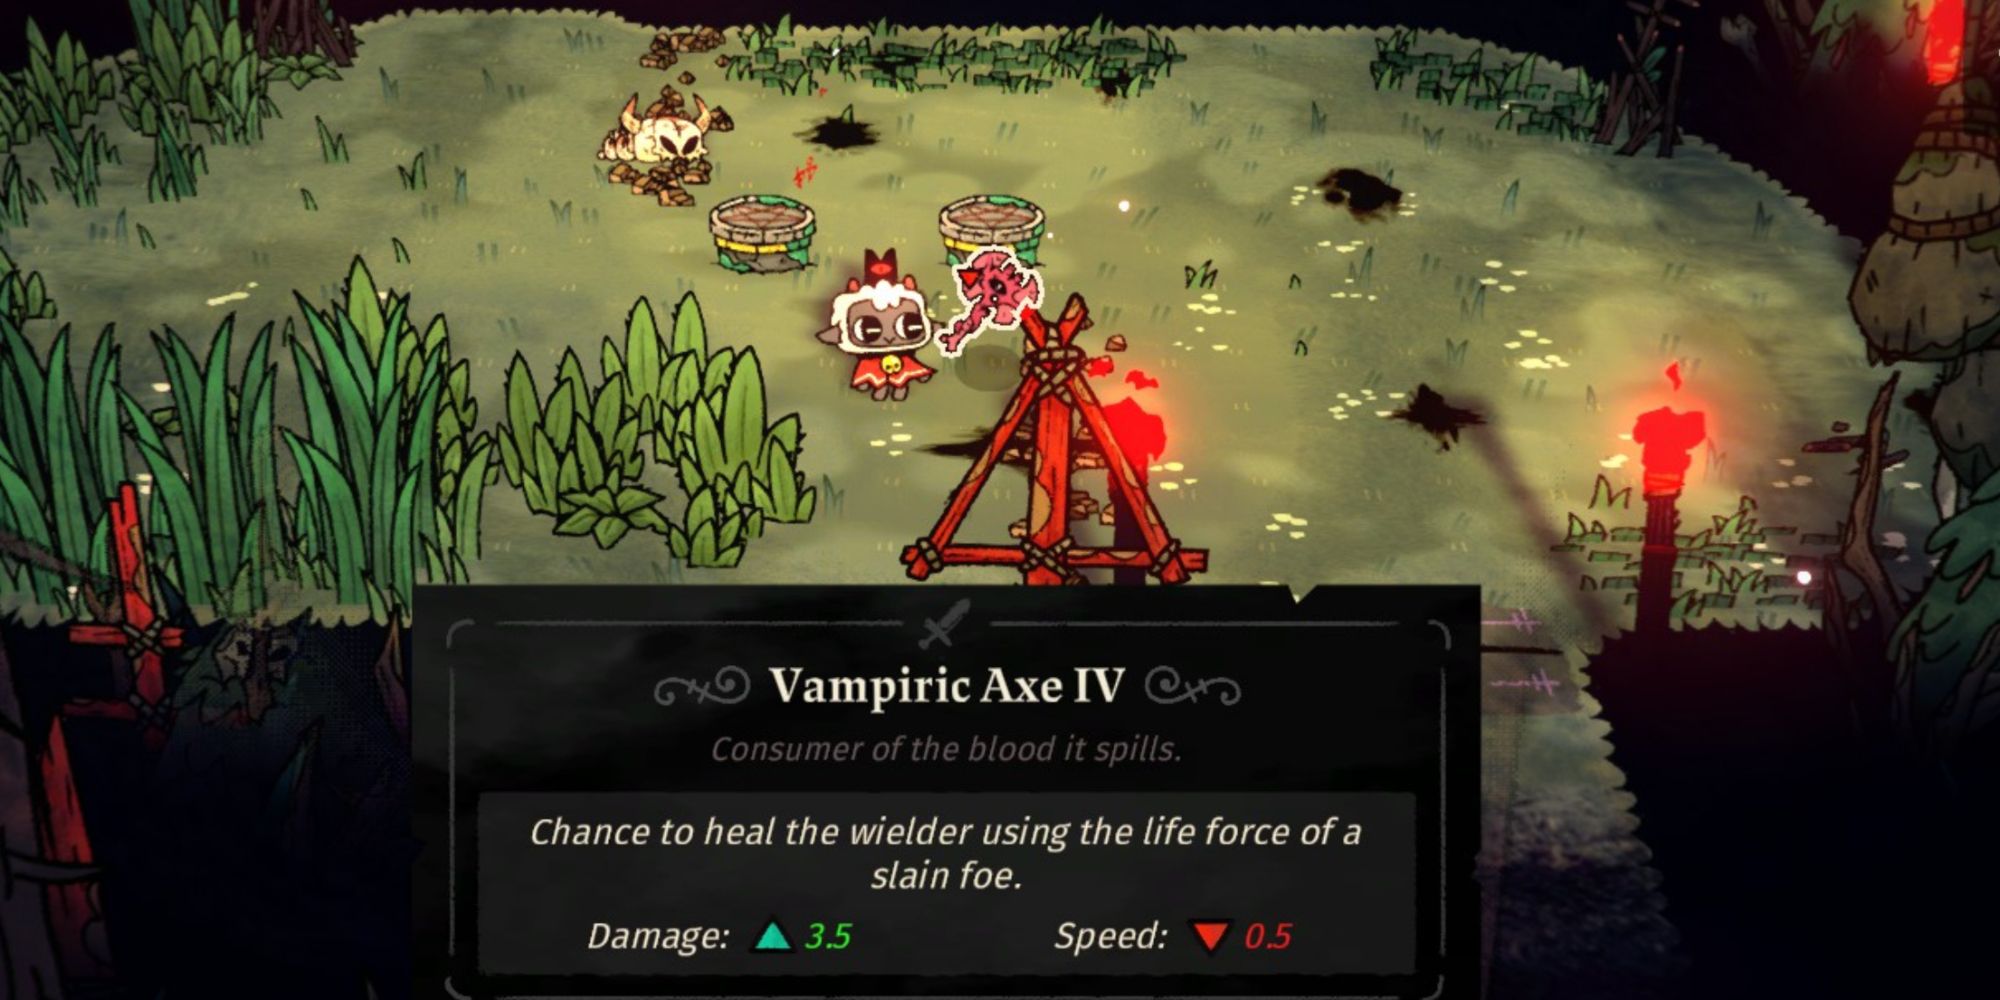 Vampiric Axe IV